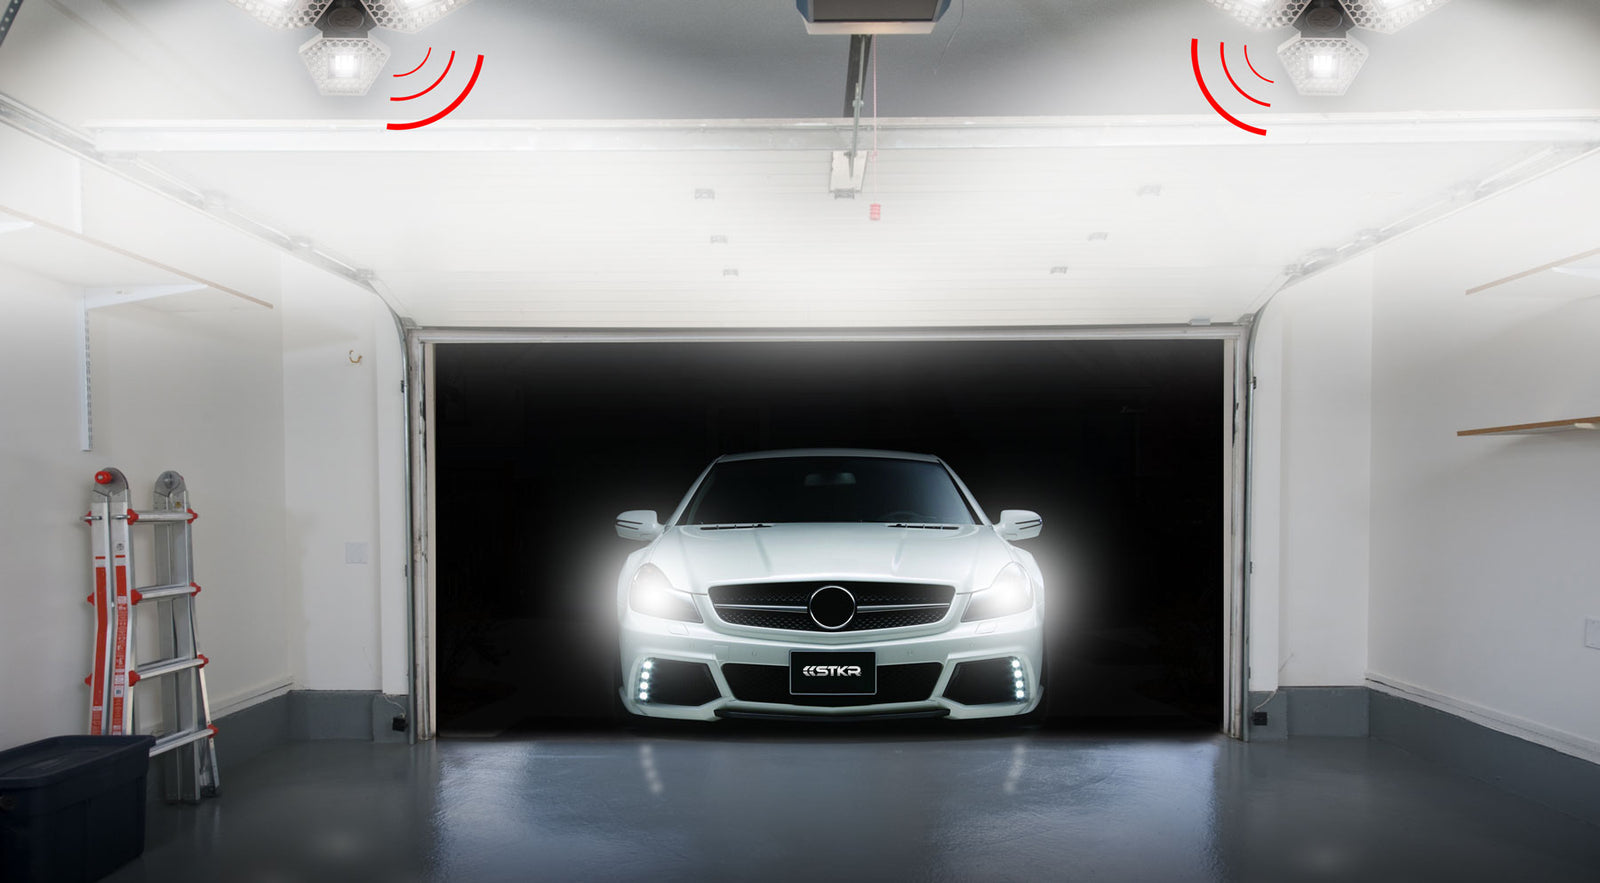 MPI - Multi-Point Illumination Motion Garage Ceiling Light - STKR